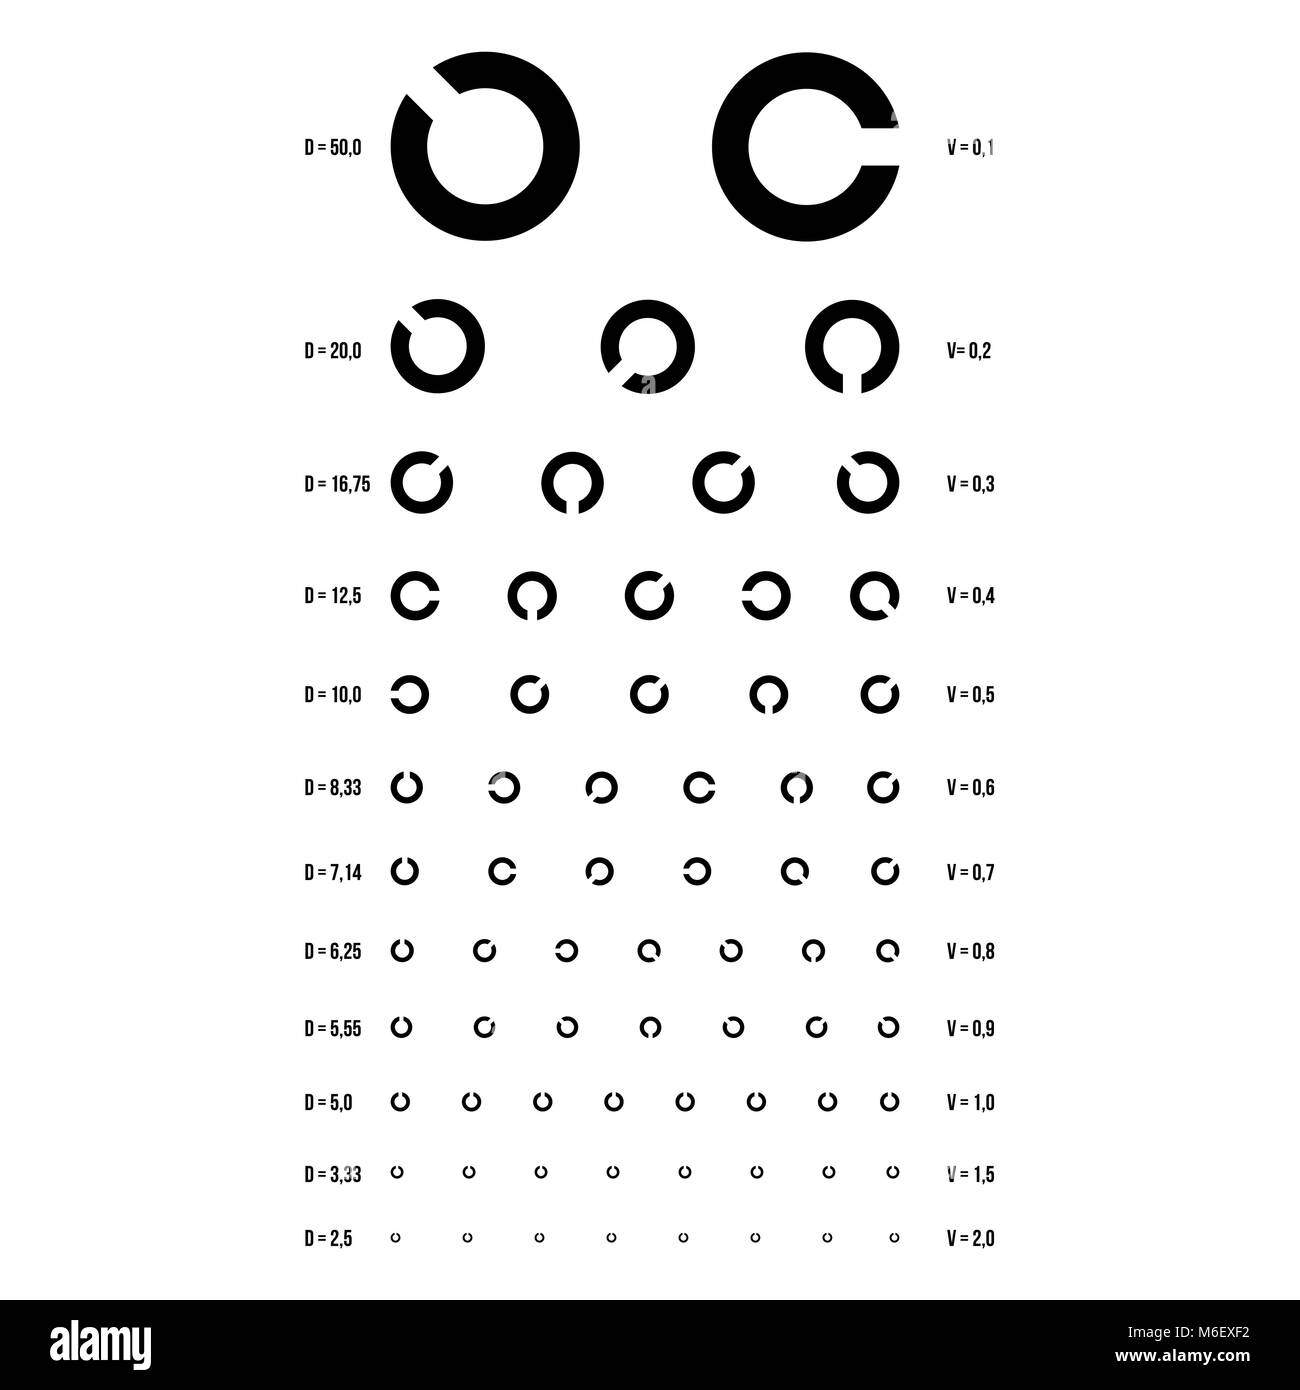 Eye Test Chart Vector. Rings Chart. Vision Exam. Optometrist Check. Medical Eye Diagnostic. Sight, Eyesight. Optical Examination. Illustration Stock Vector